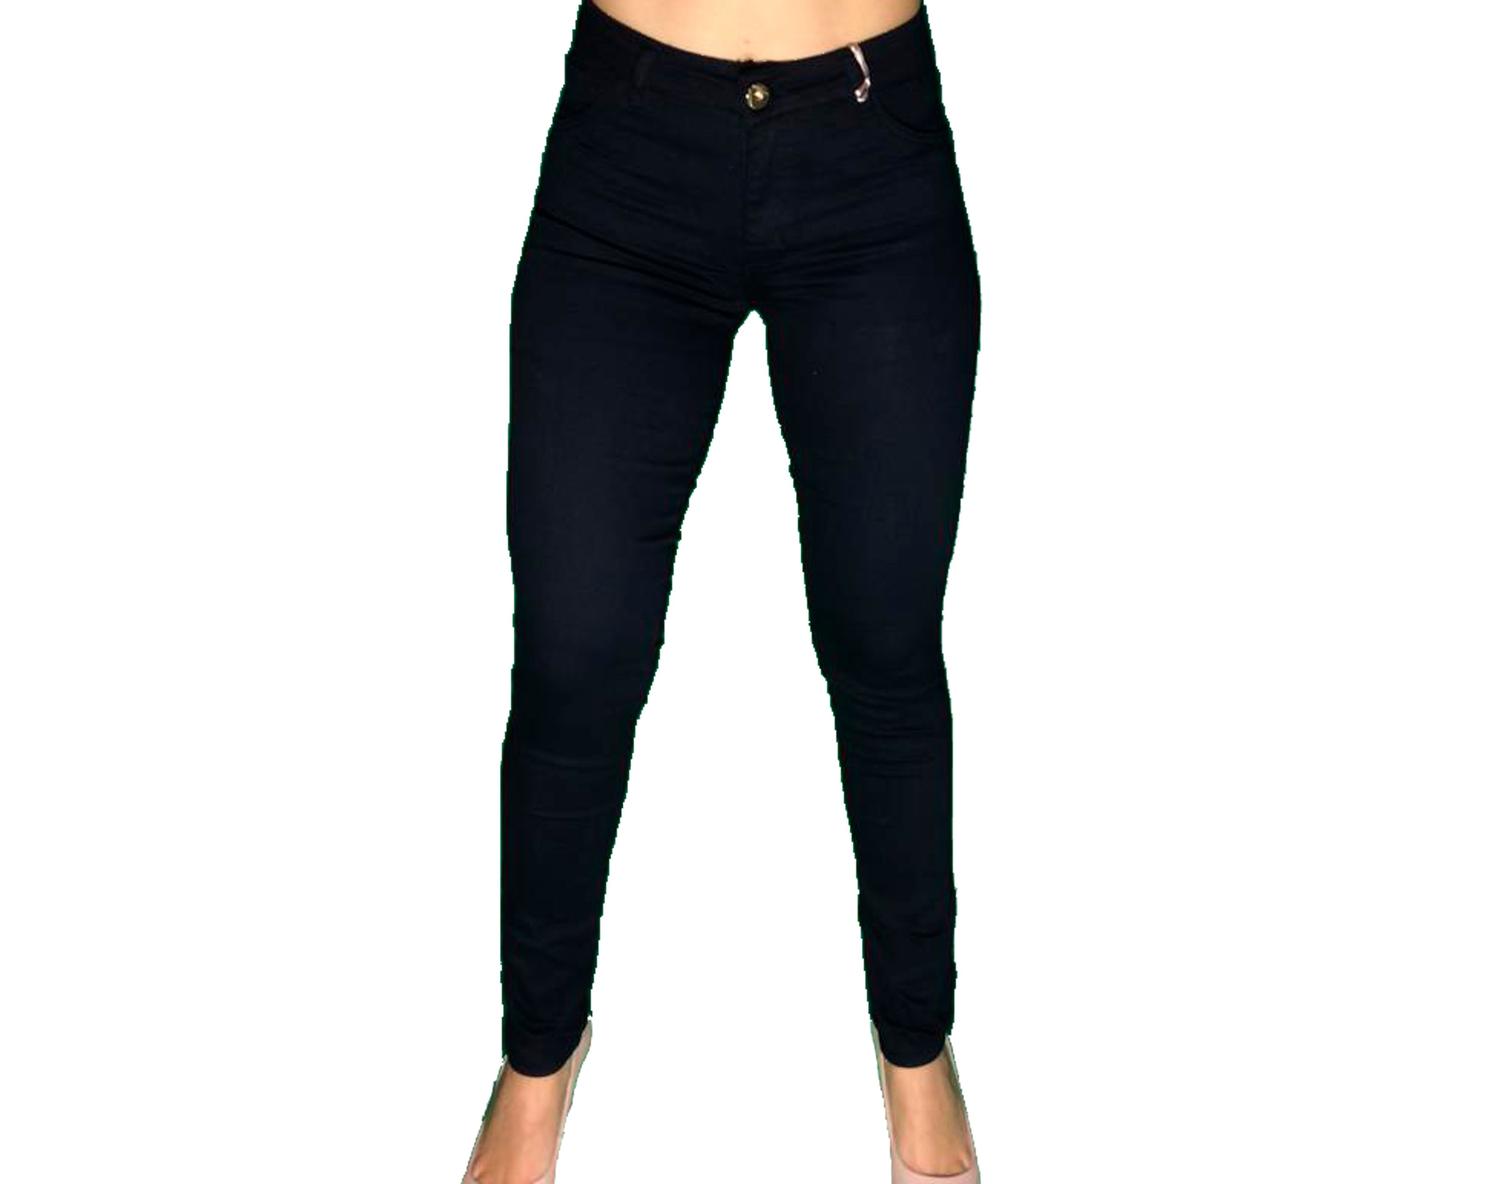 calça jeans feminina cintura alta preta